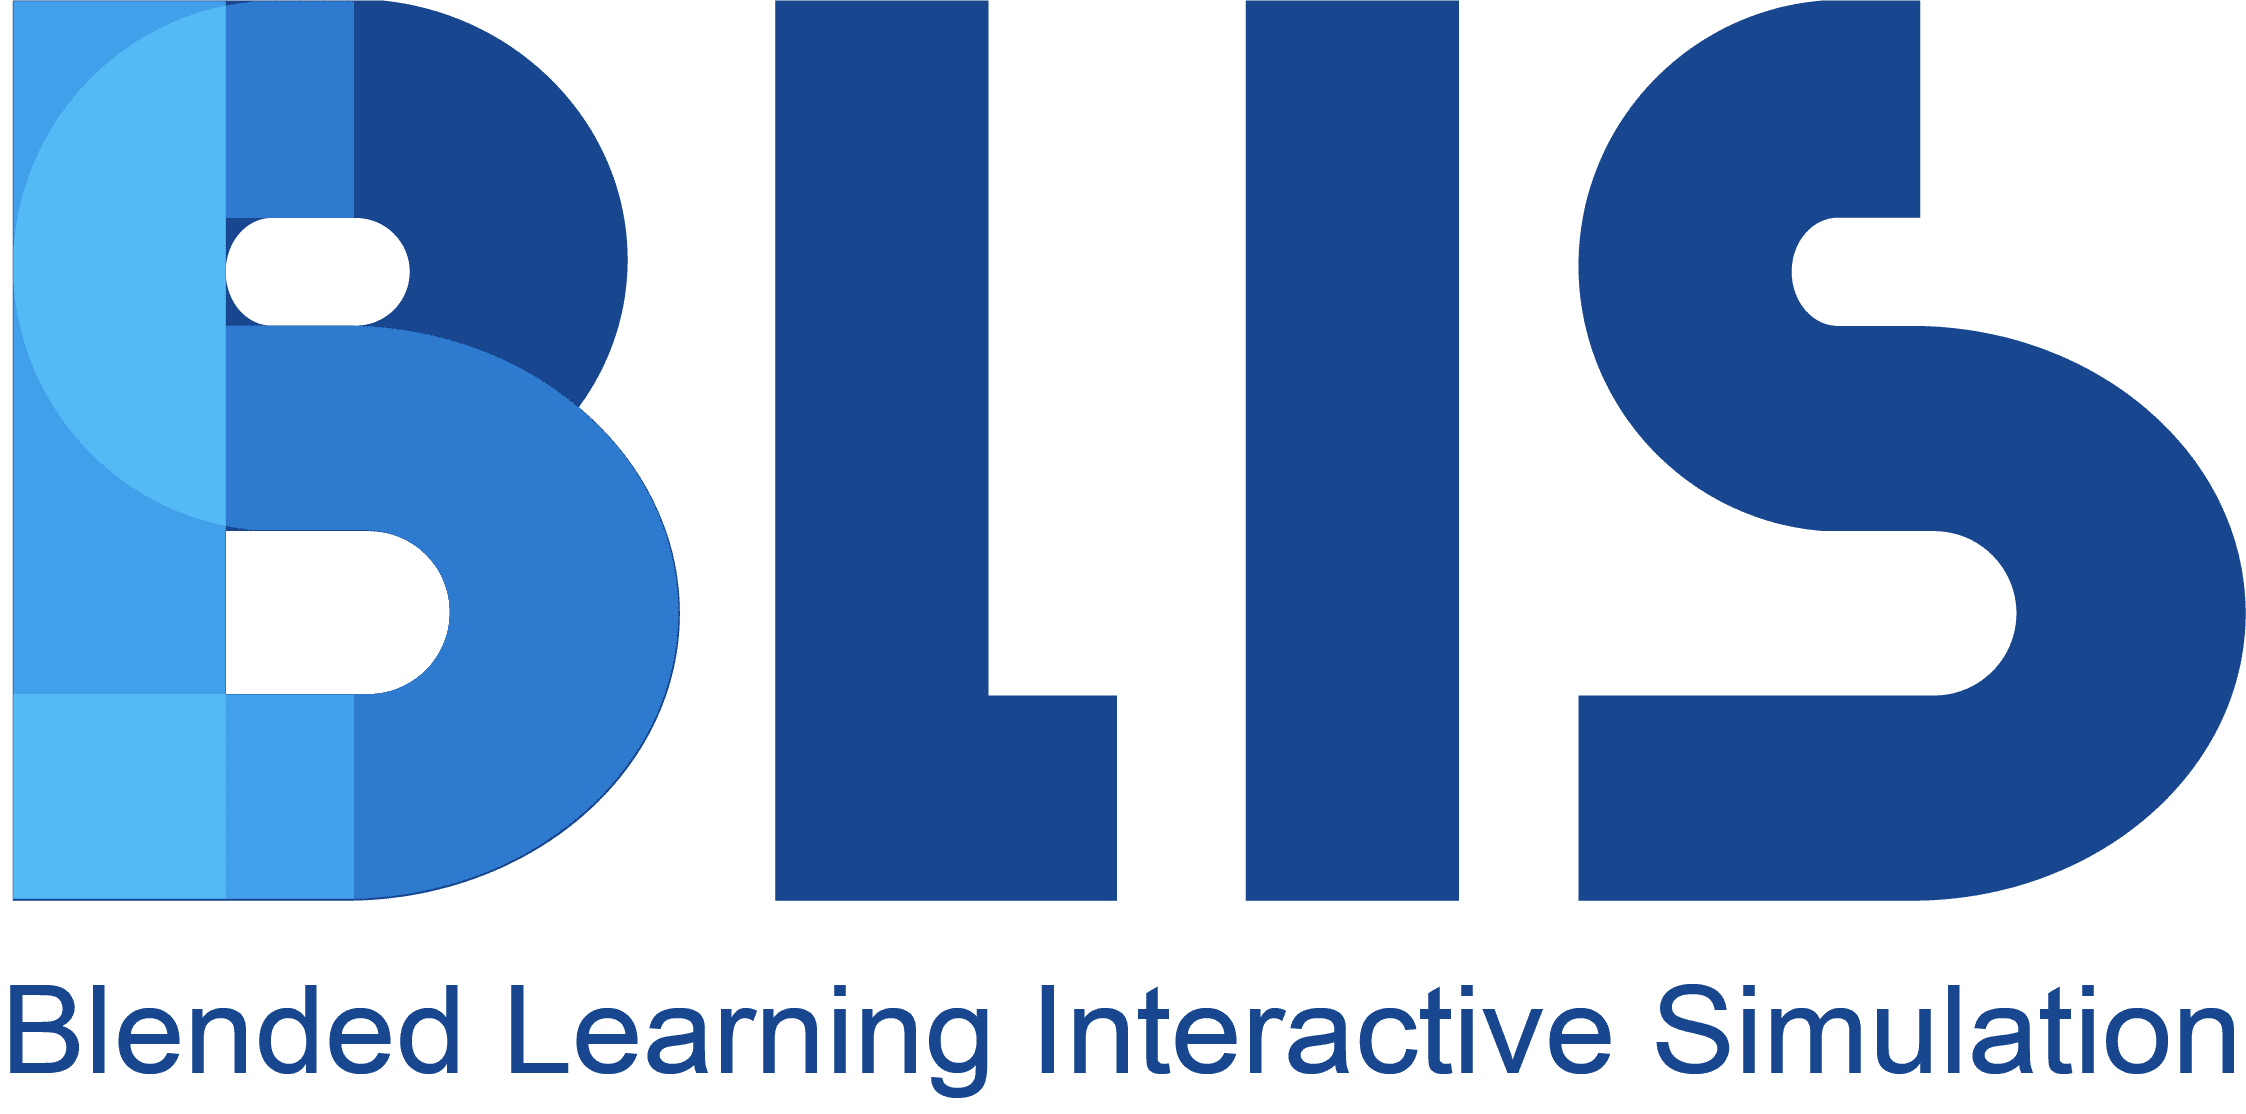 BLIS Blended Learning Interative Simulation